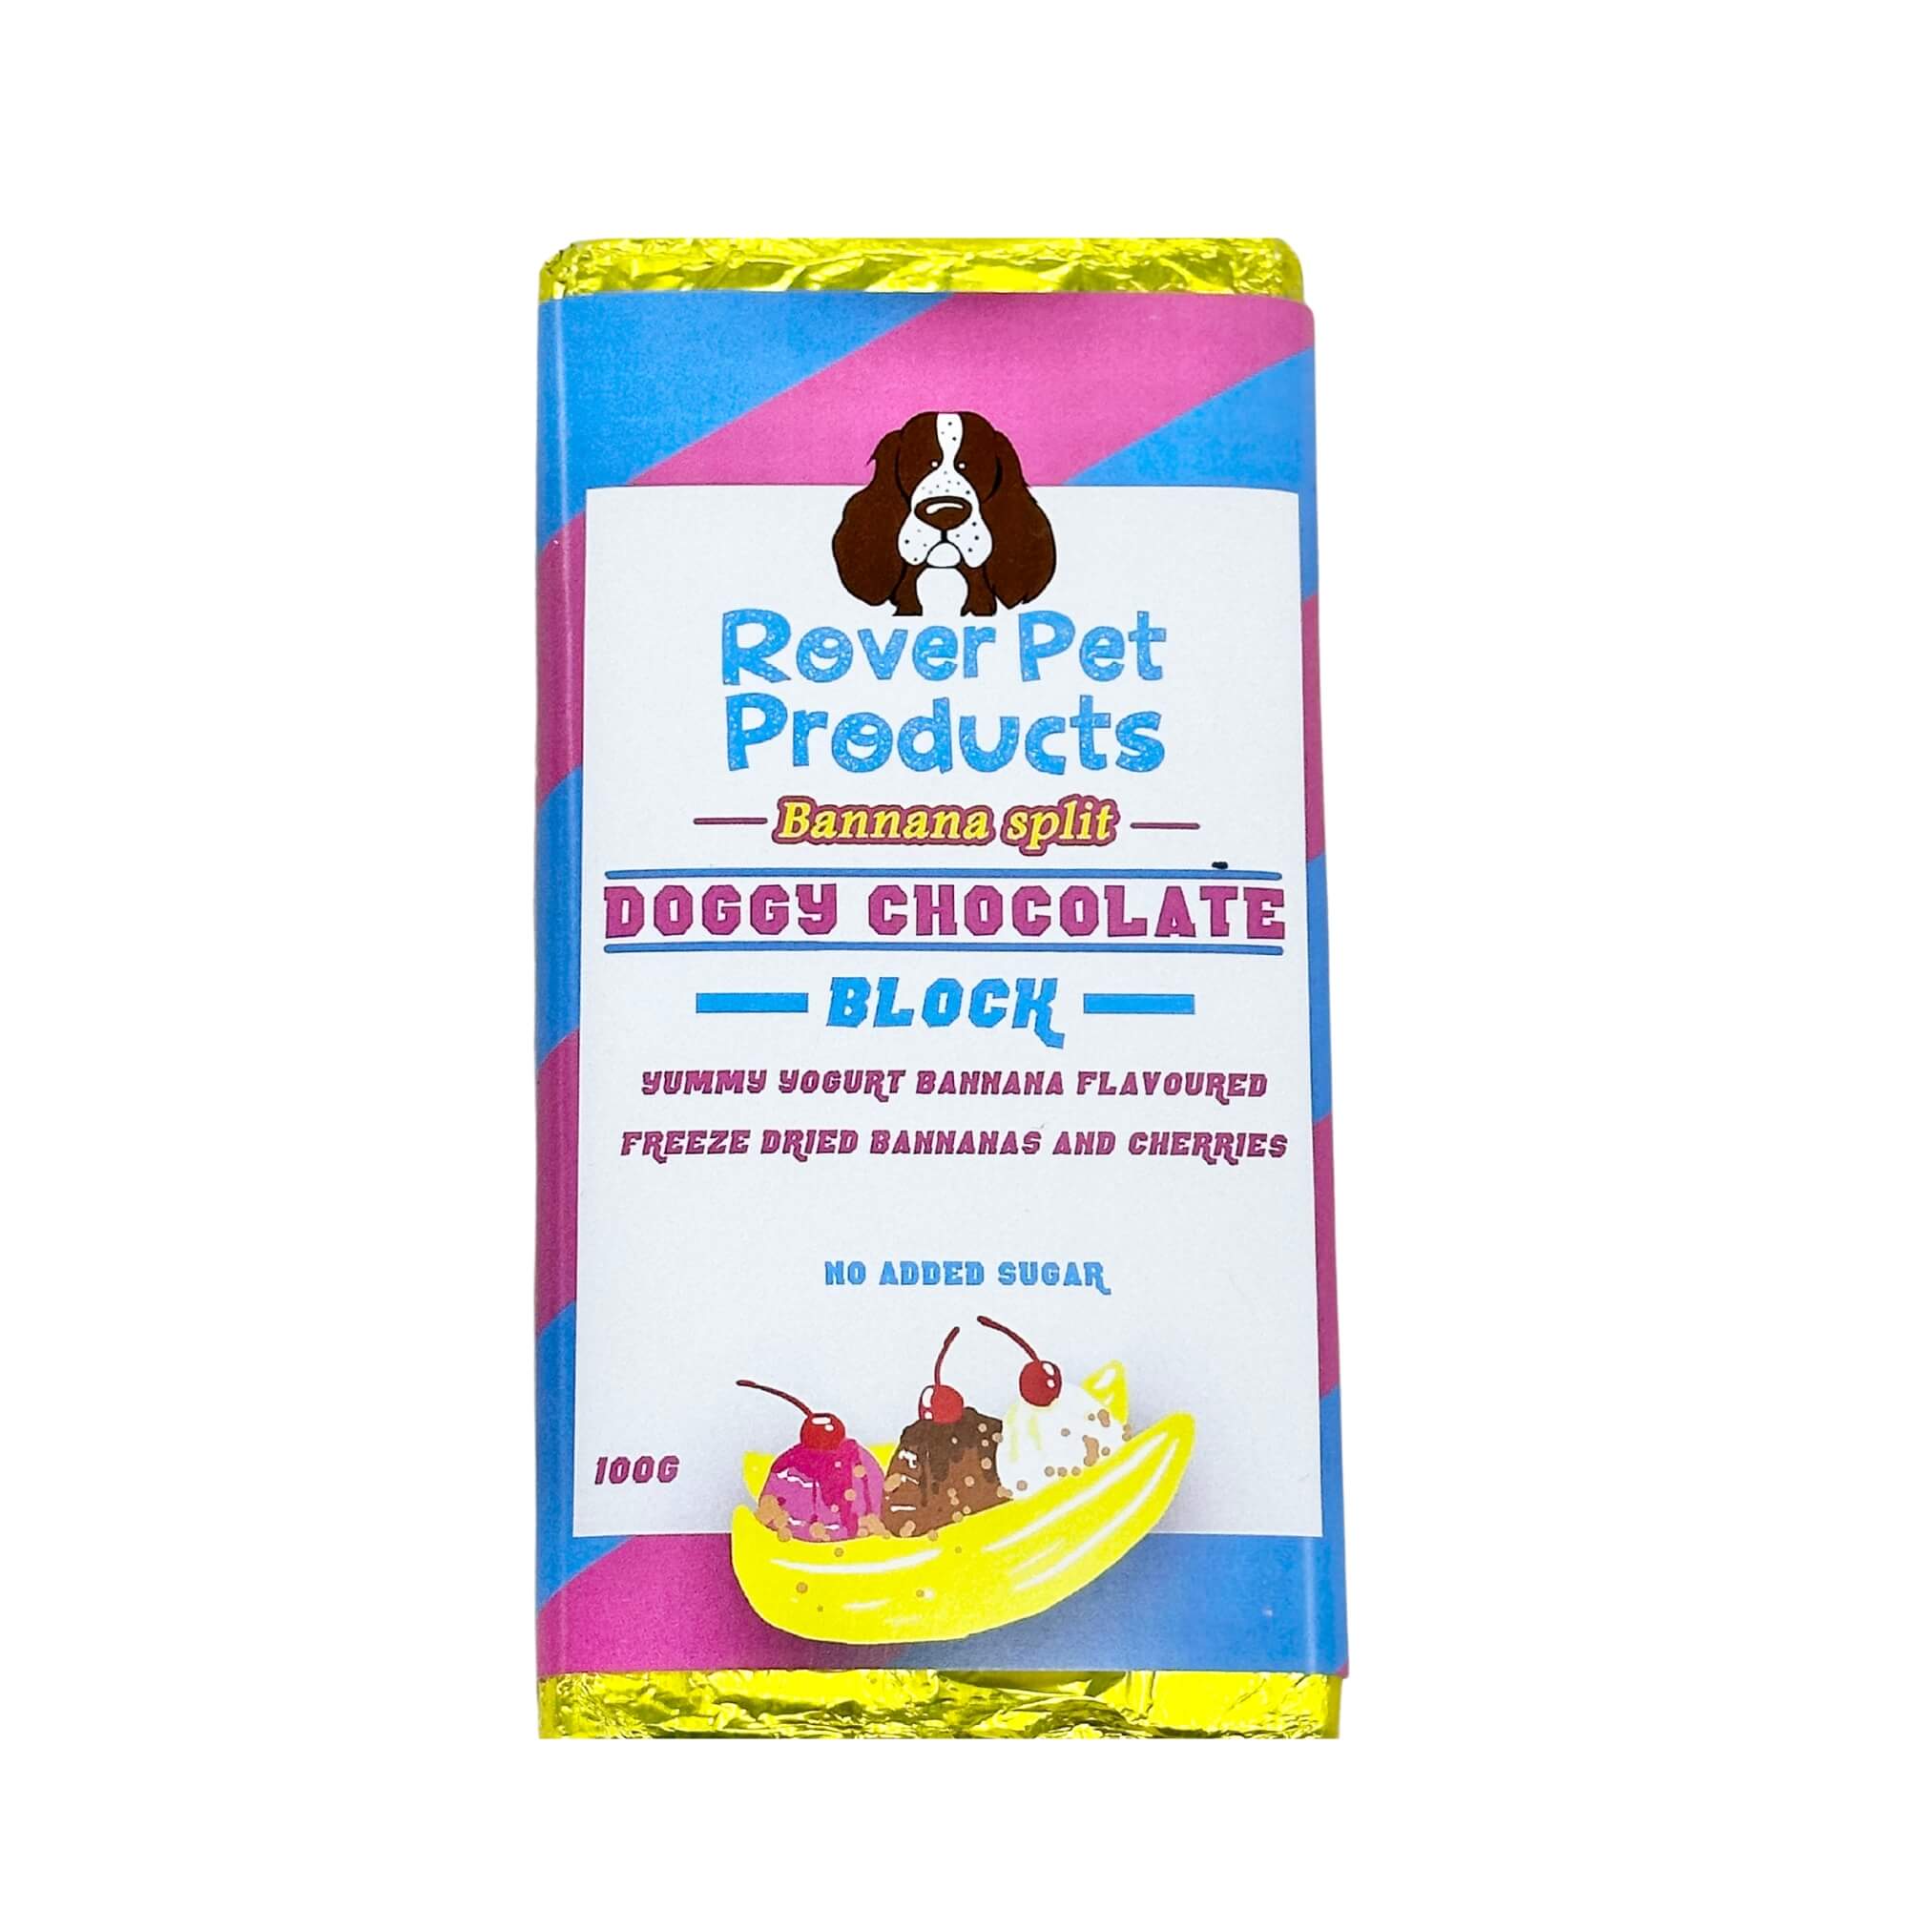 Rover Pet Products Doggy Chocolate Blocks  |  Dog Treats